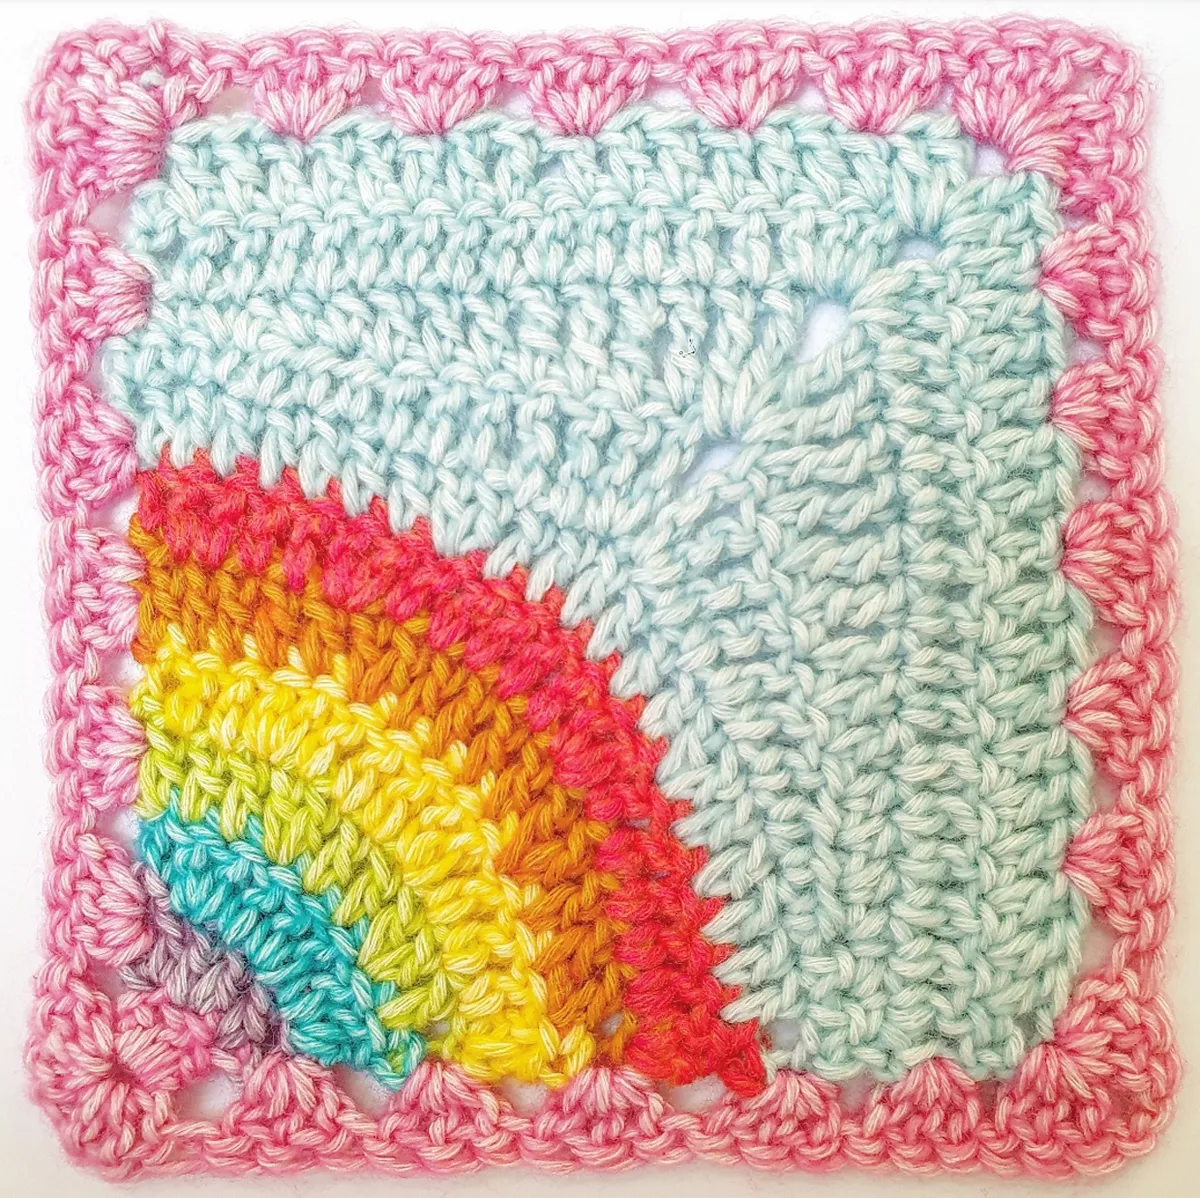 Free_rainbow_granny_square_crochet_pattern_by_Natalie_Beard